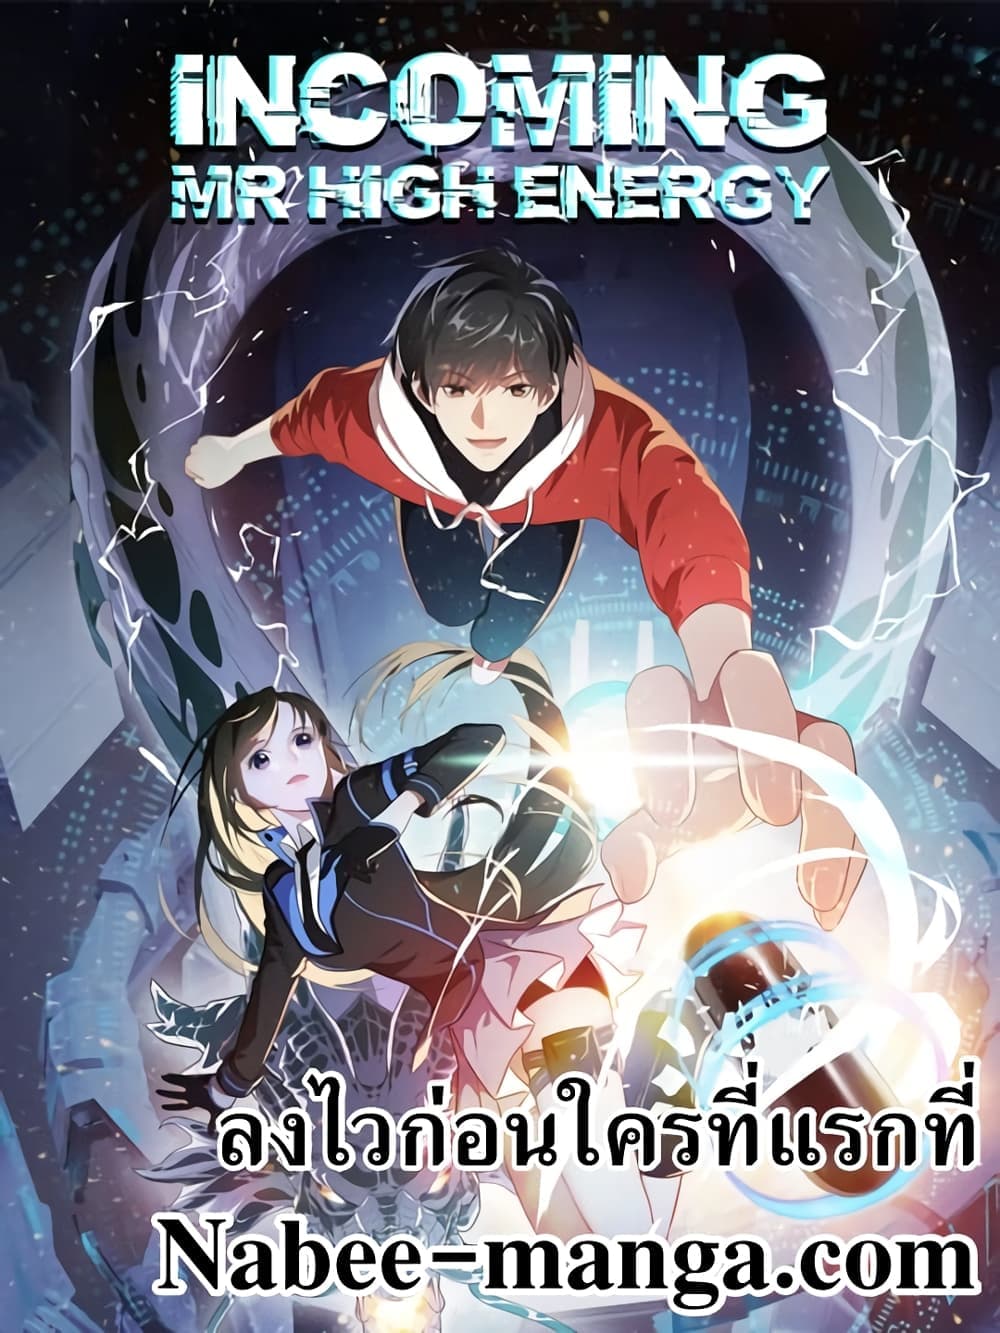 High Energy Strikes à¸à¸­à¸à¸à¸µà¹ 243 (1)